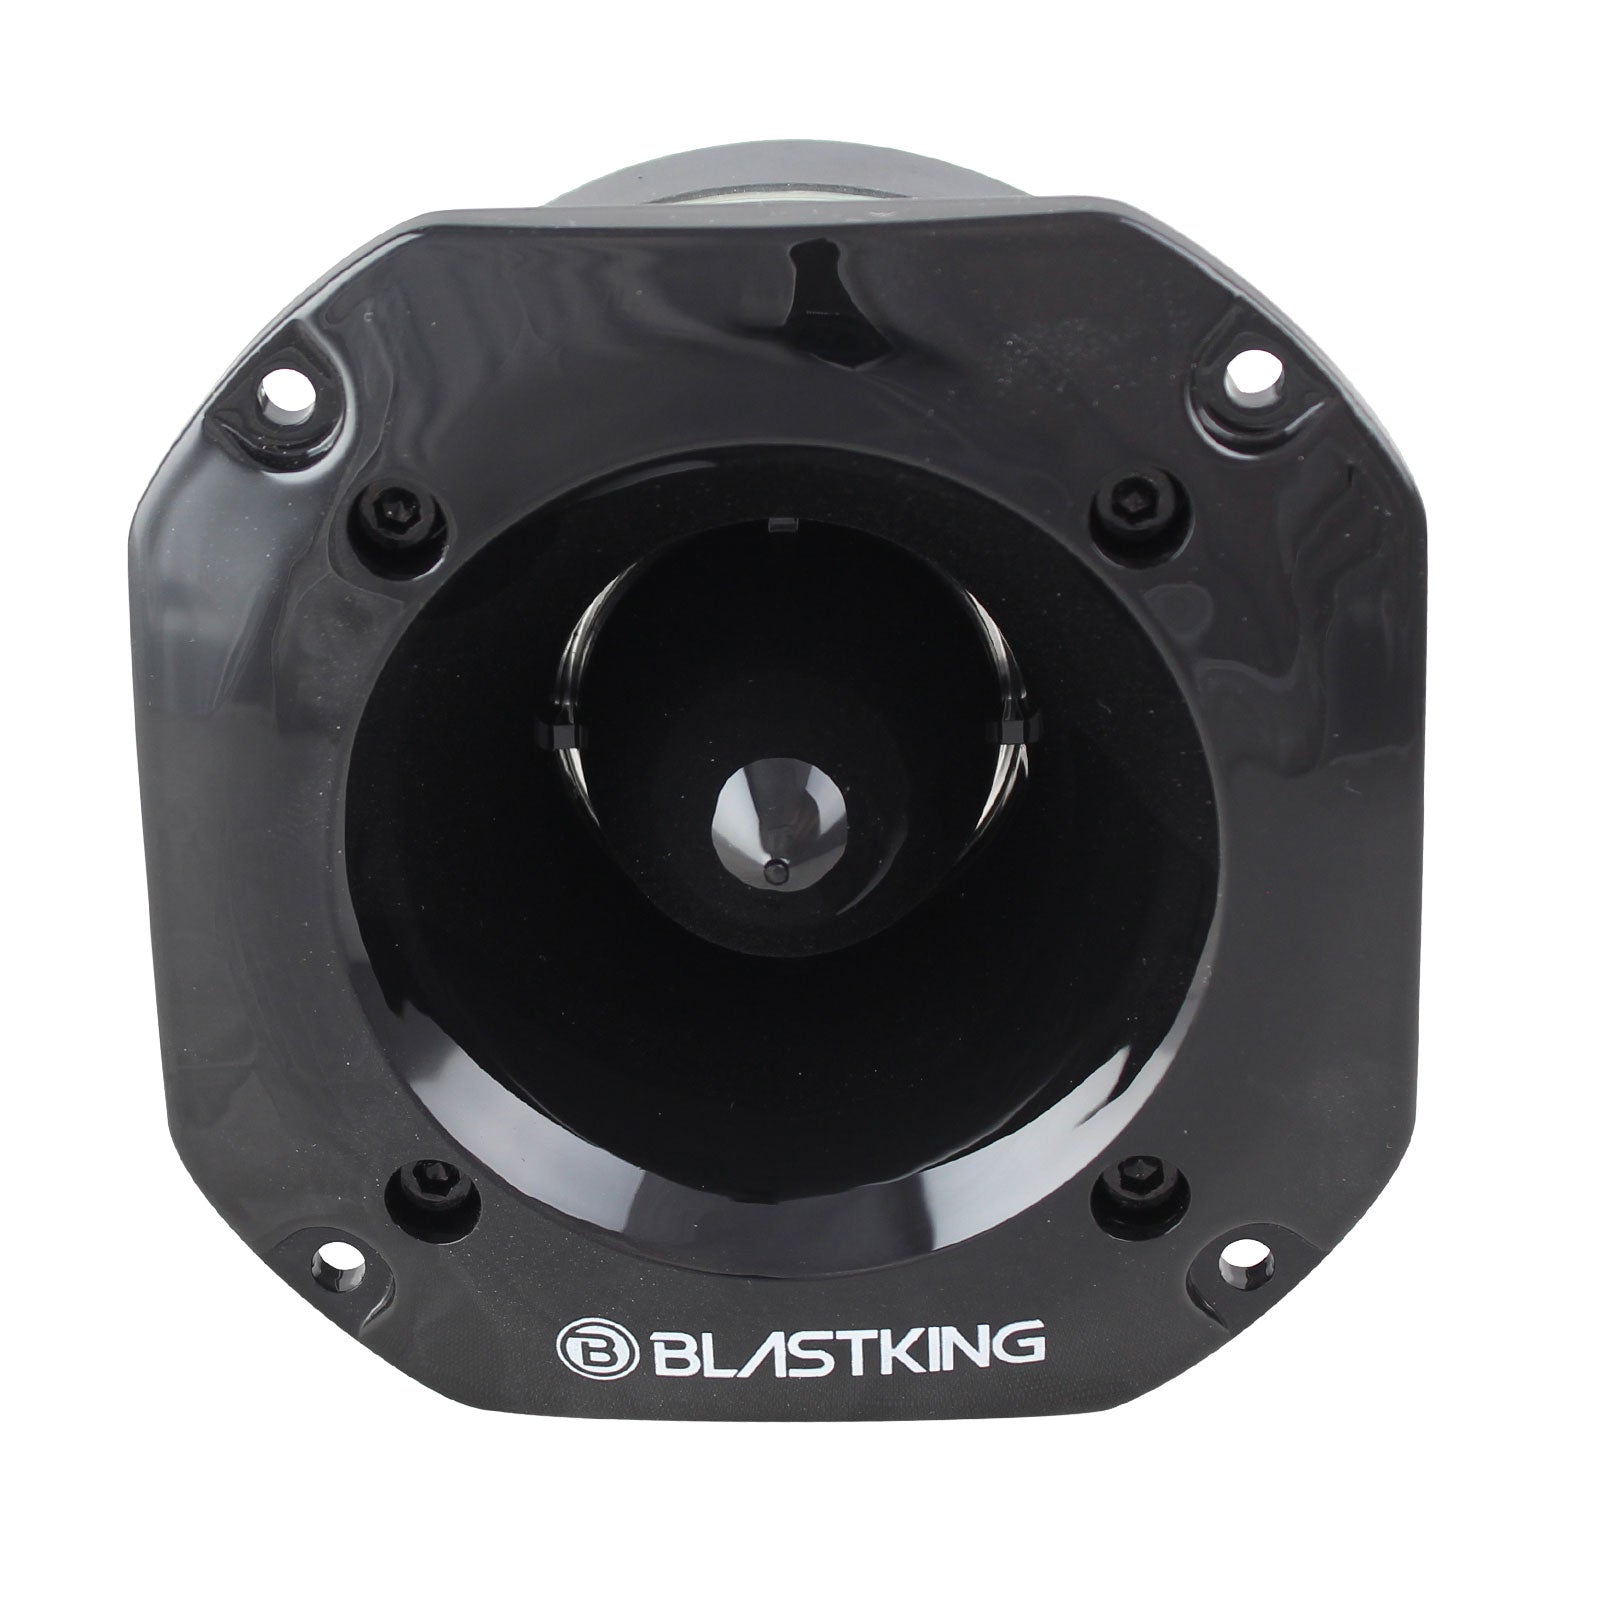 Blastking TW2000-BLK 500 Watts 4x4 inch 1.5 inch VC Titanium Bullet Tweeter Black